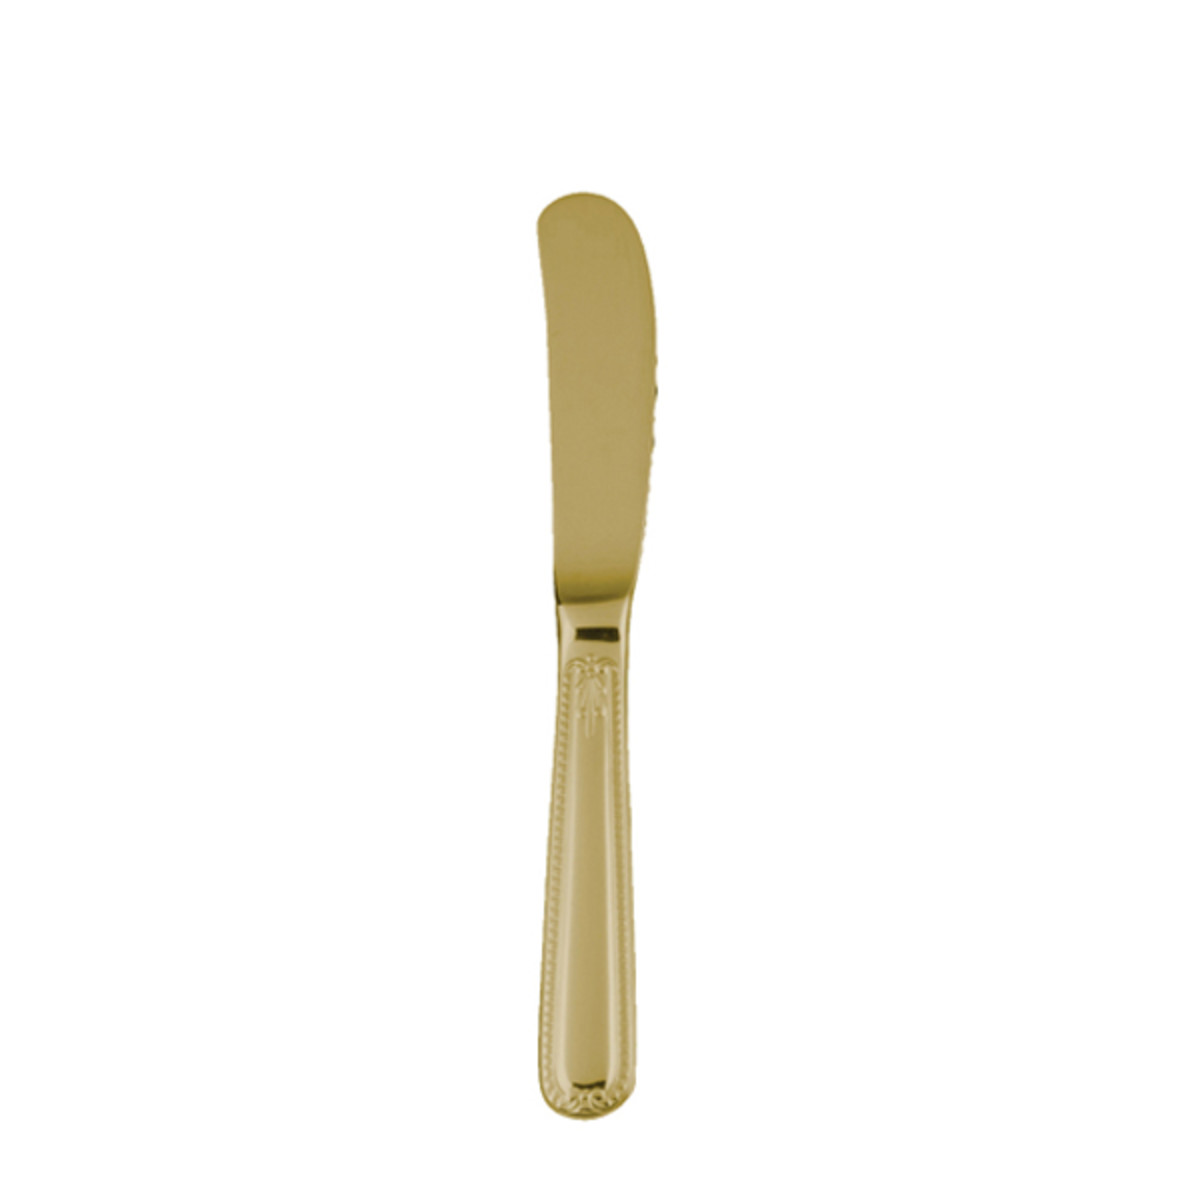 Savoy Gold Butter Knife 6.75"